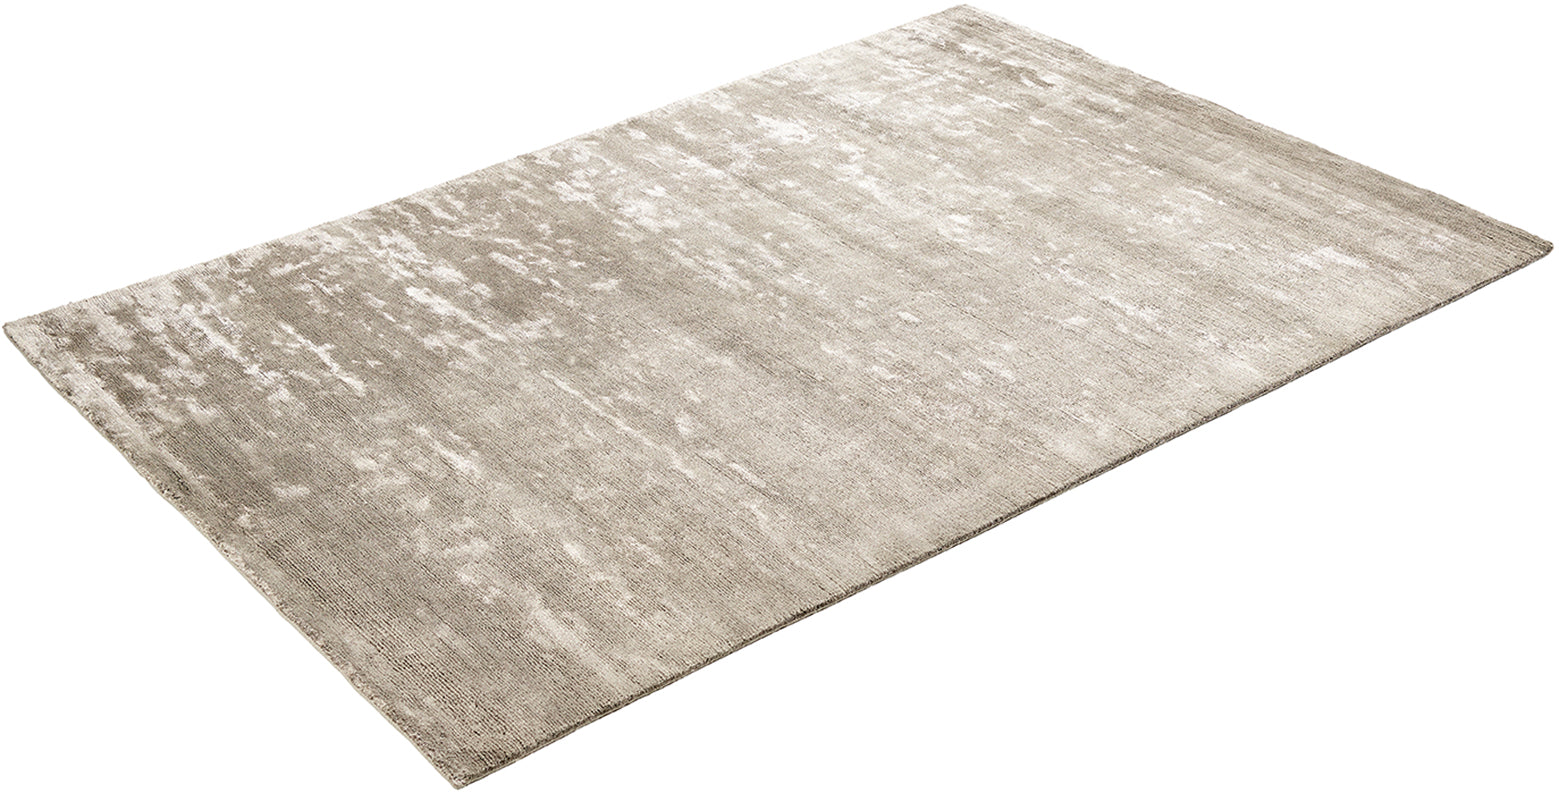 large plain light grey rug
